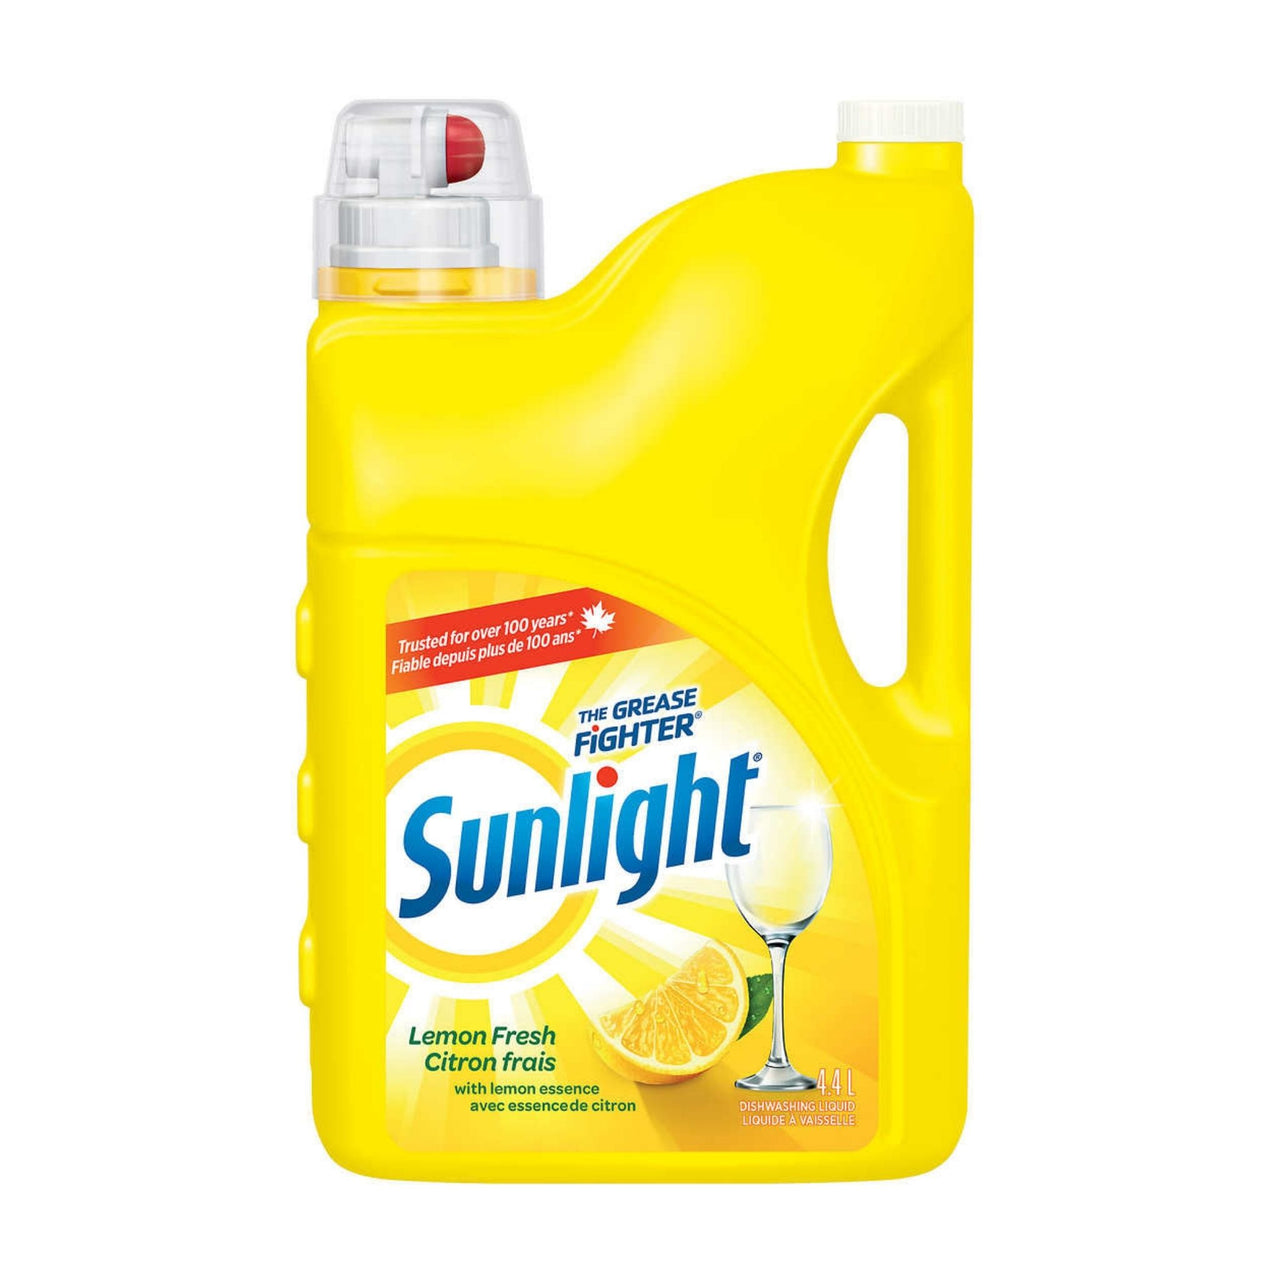 Image of Sunlight Dishwashing Soap 4.4L